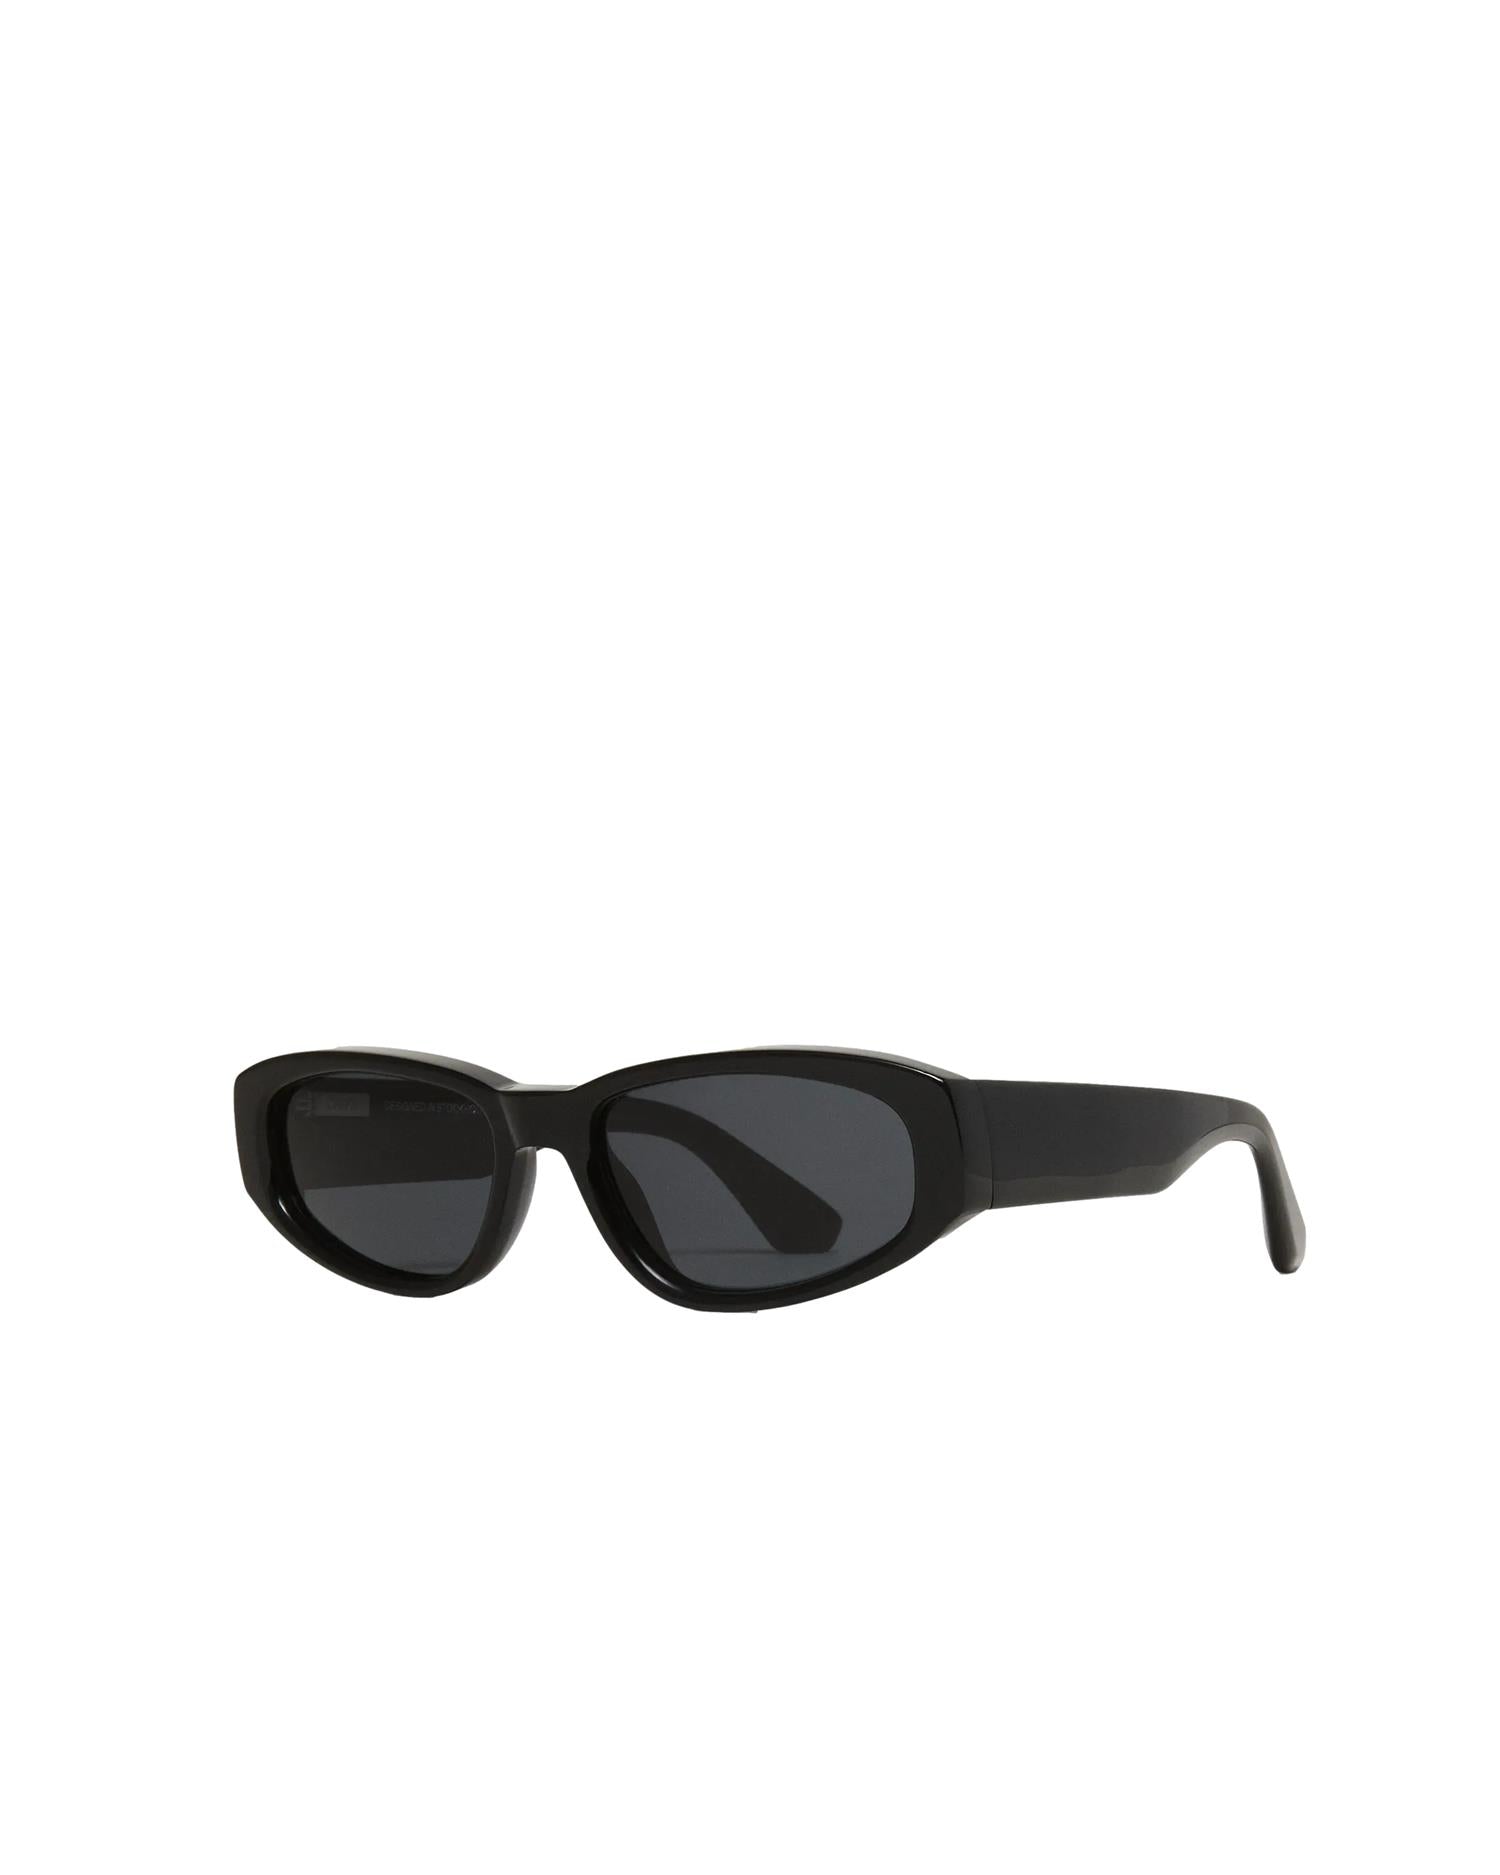 Chimi Eyewear 09 Black Solbriller Sort - modostore.no